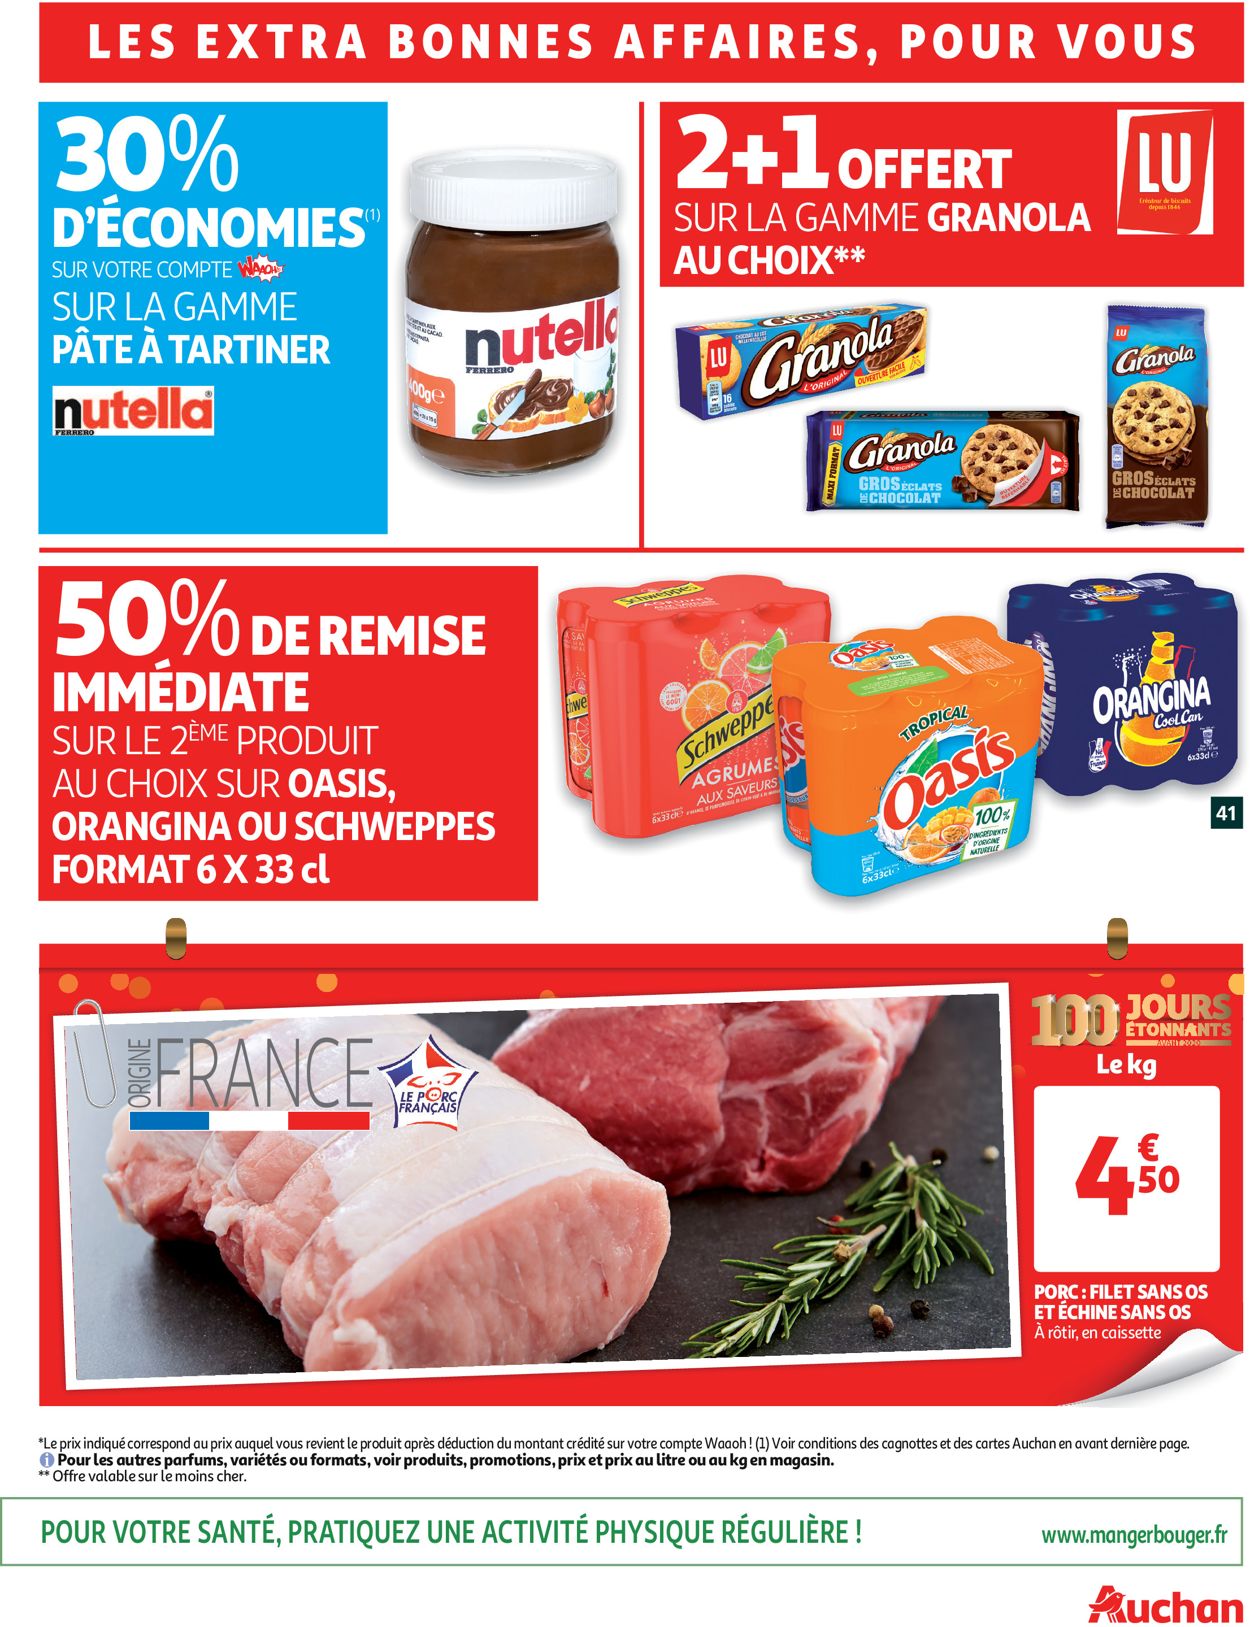 Auchan Catalogue - 02.10-08.10.2019 (Page 41)